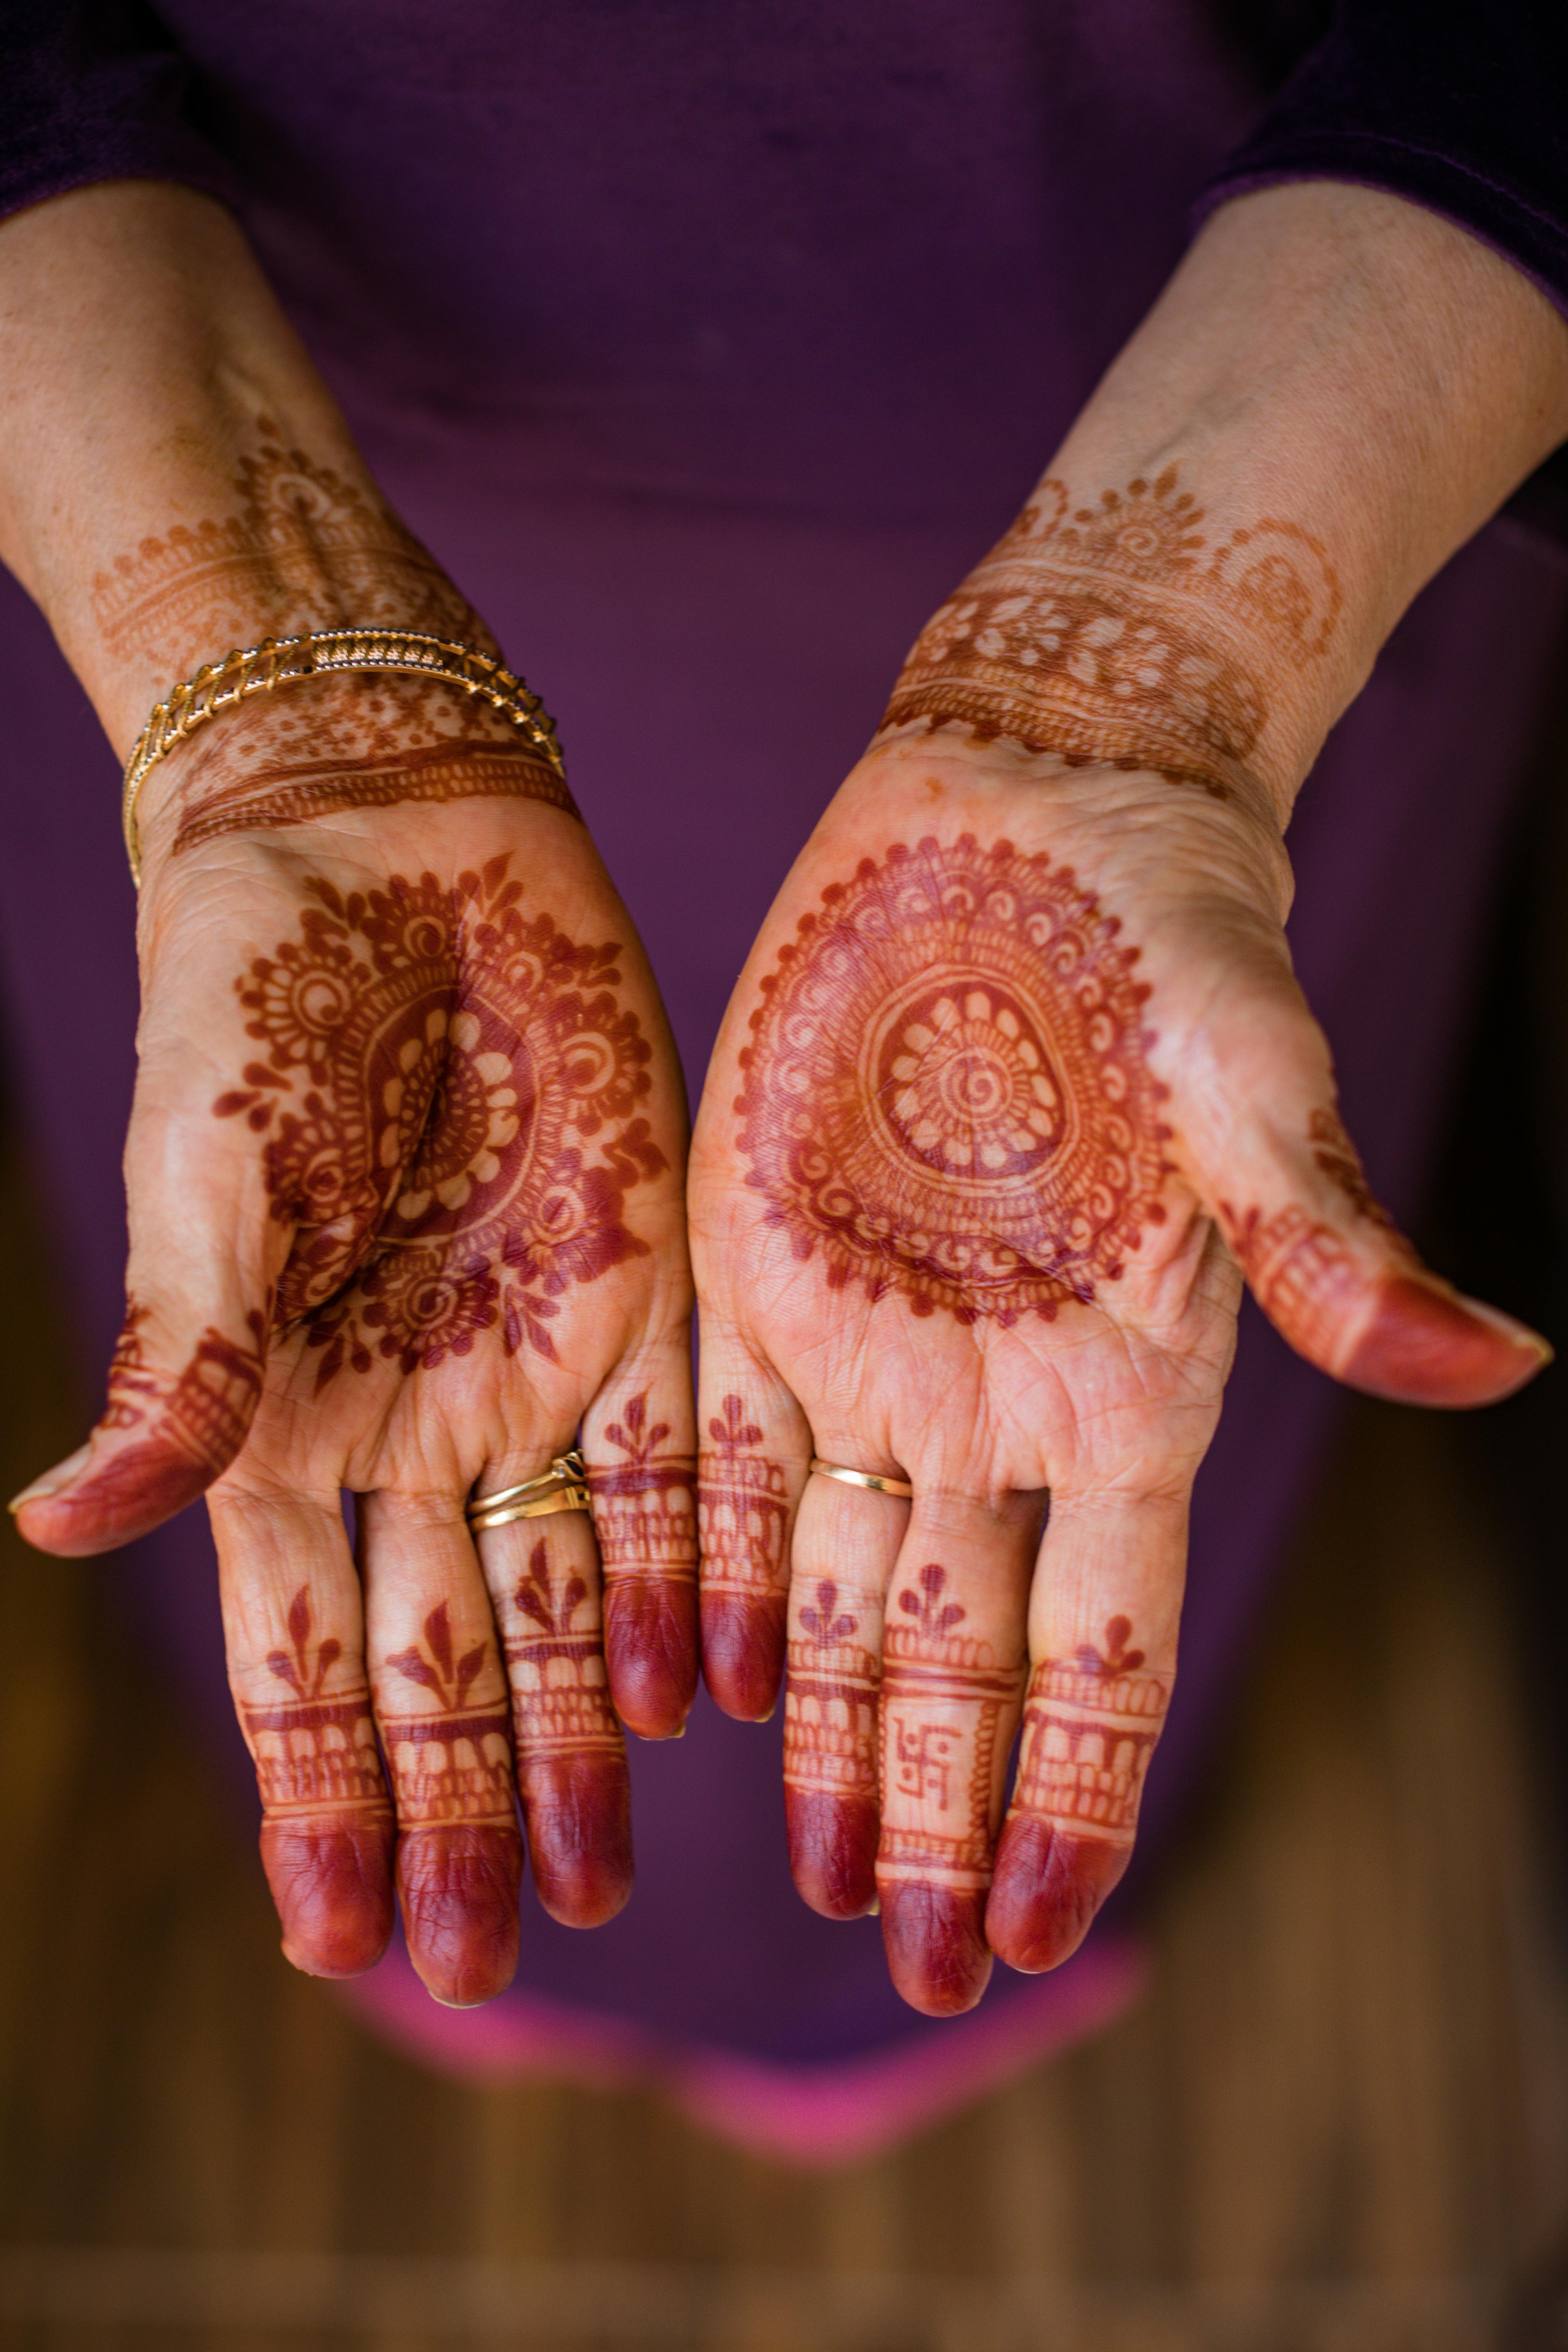 Henna art for Indian wedding : r/pics